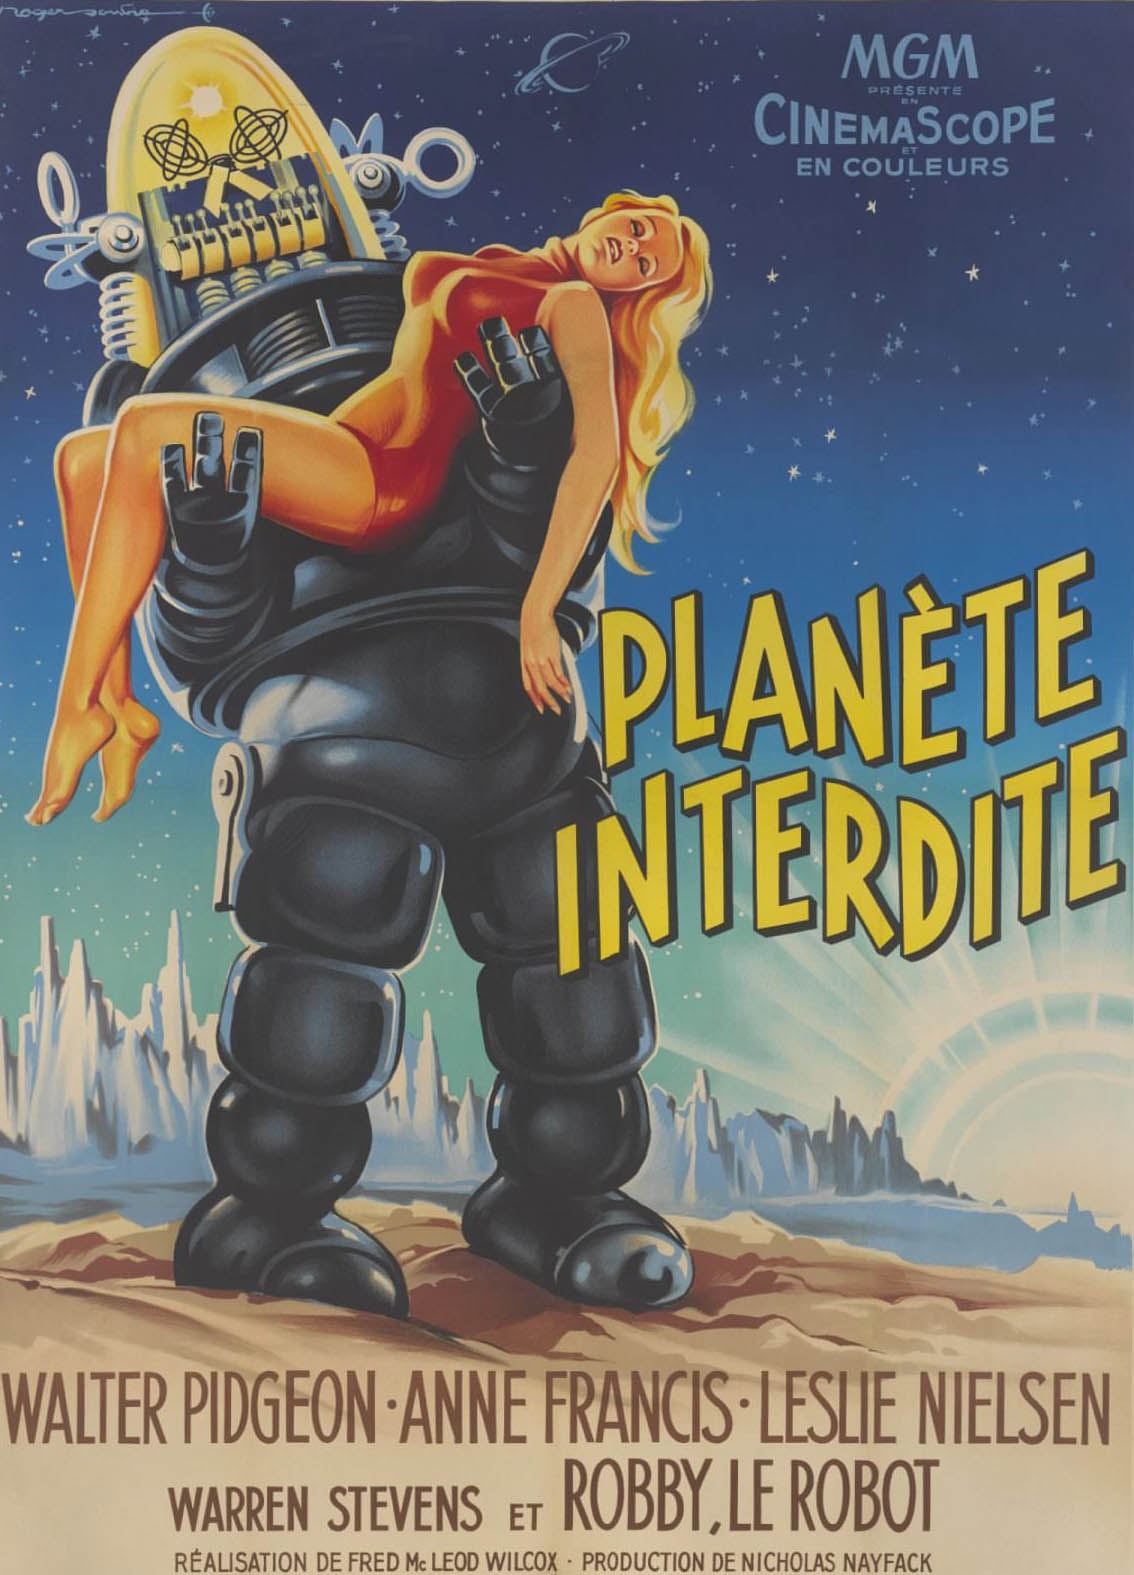 Forbidden Planet’ 1956